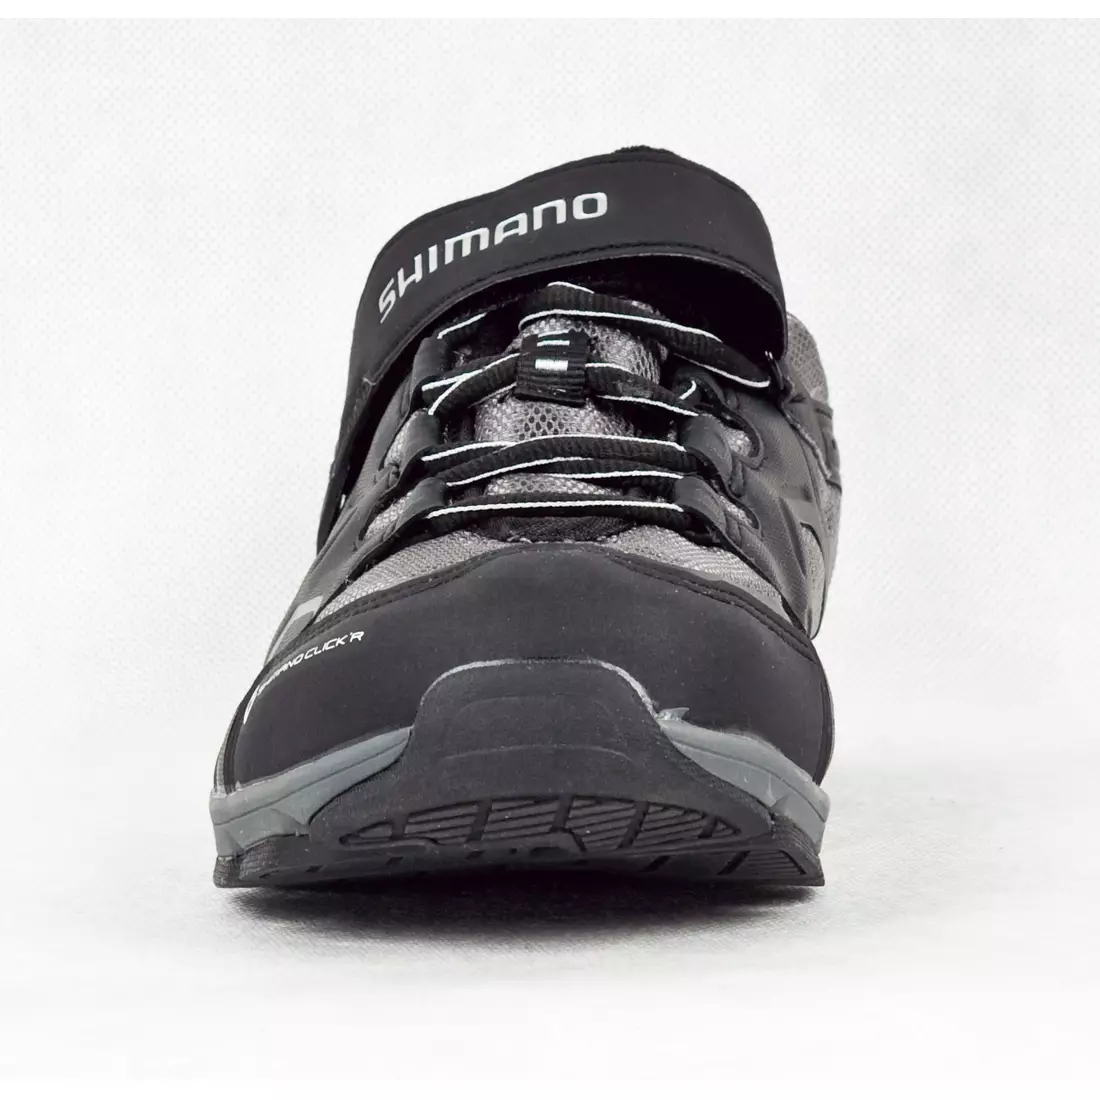 SHIMANO SH-CT70 - pantofi de ciclism recreațional cu sistemul CLICK'R